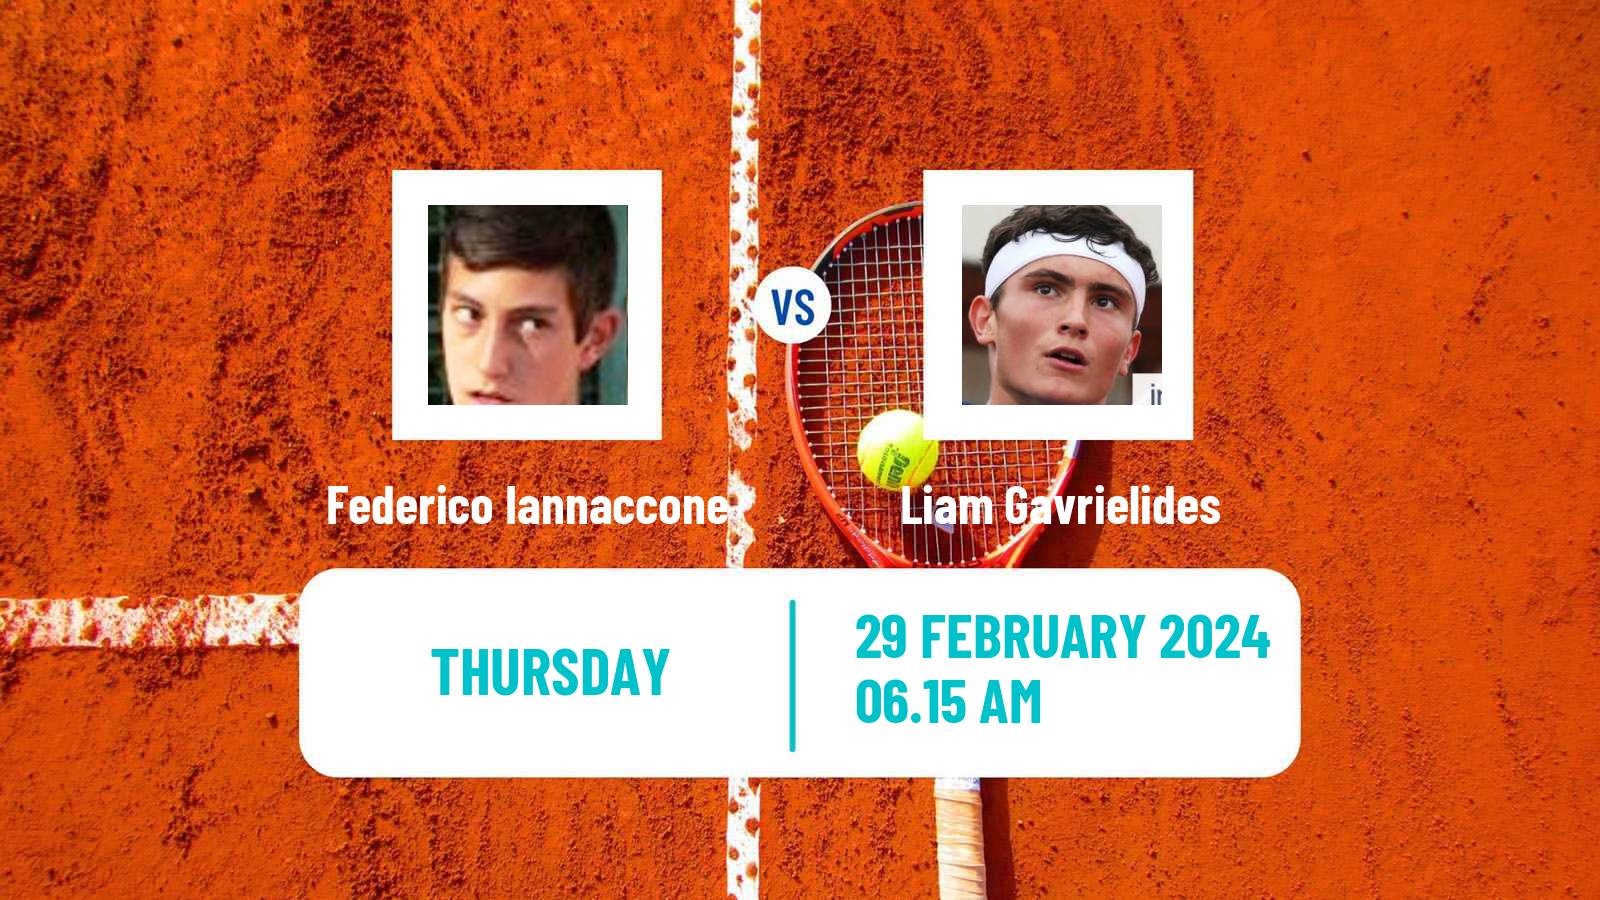 Tennis ITF M15 Villena 2 Men Federico Iannaccone - Liam Gavrielides